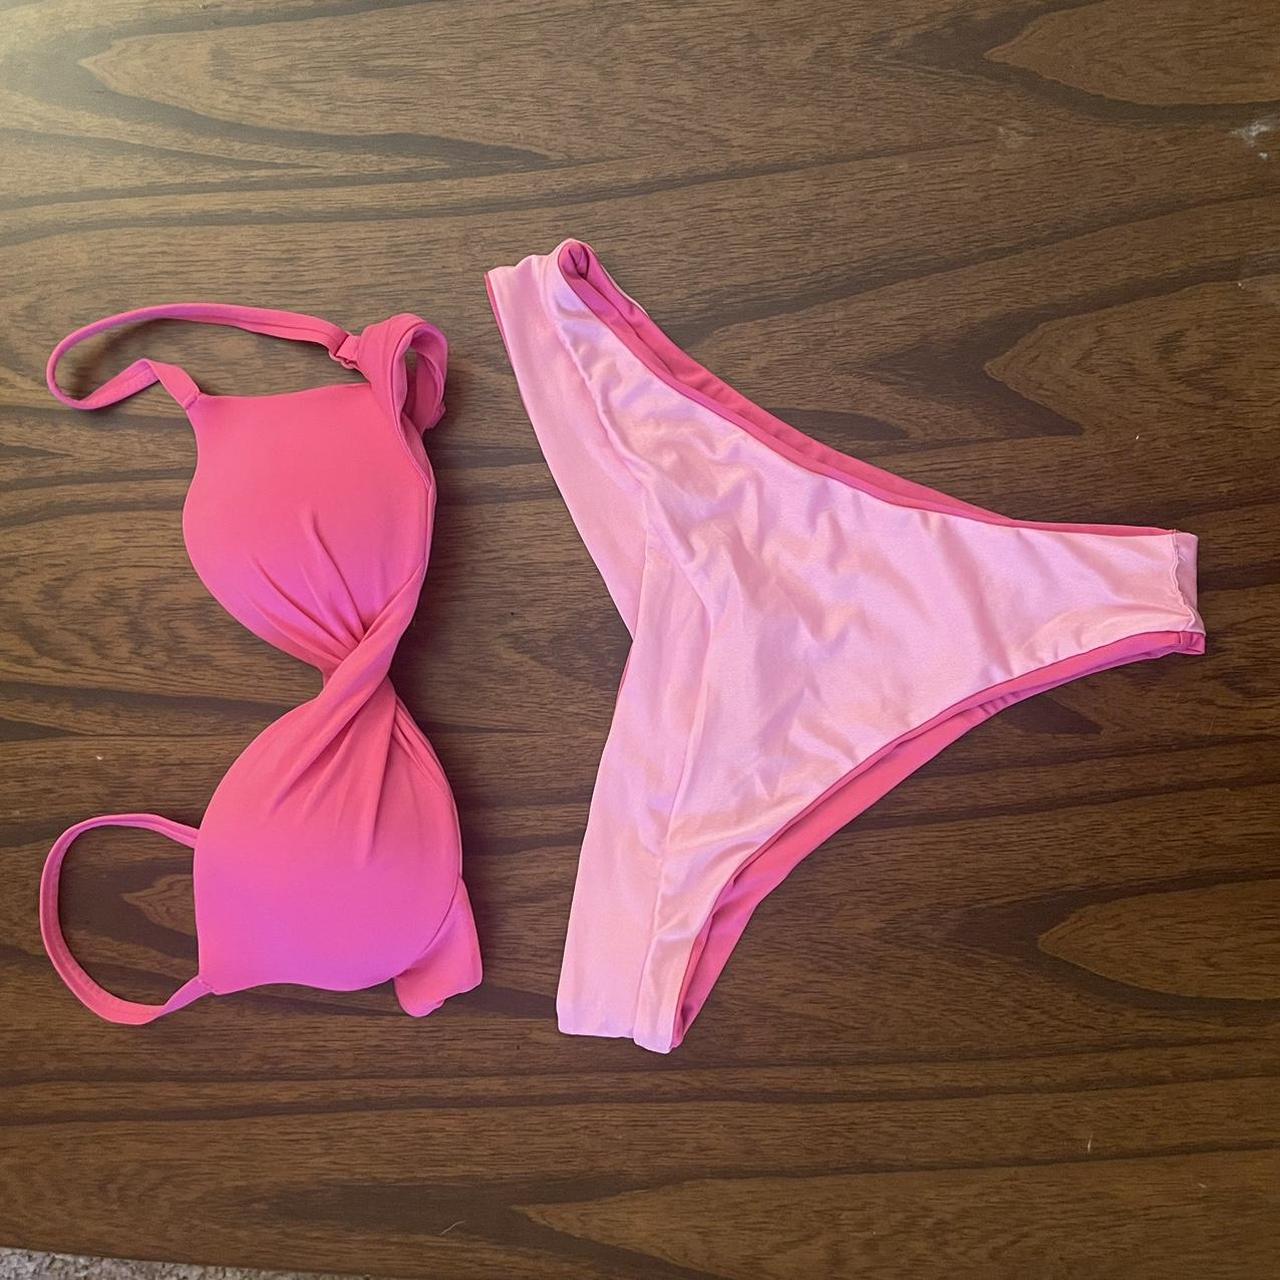 Calzedonia Women's Pink Bikinis-and-tankini-sets (4)